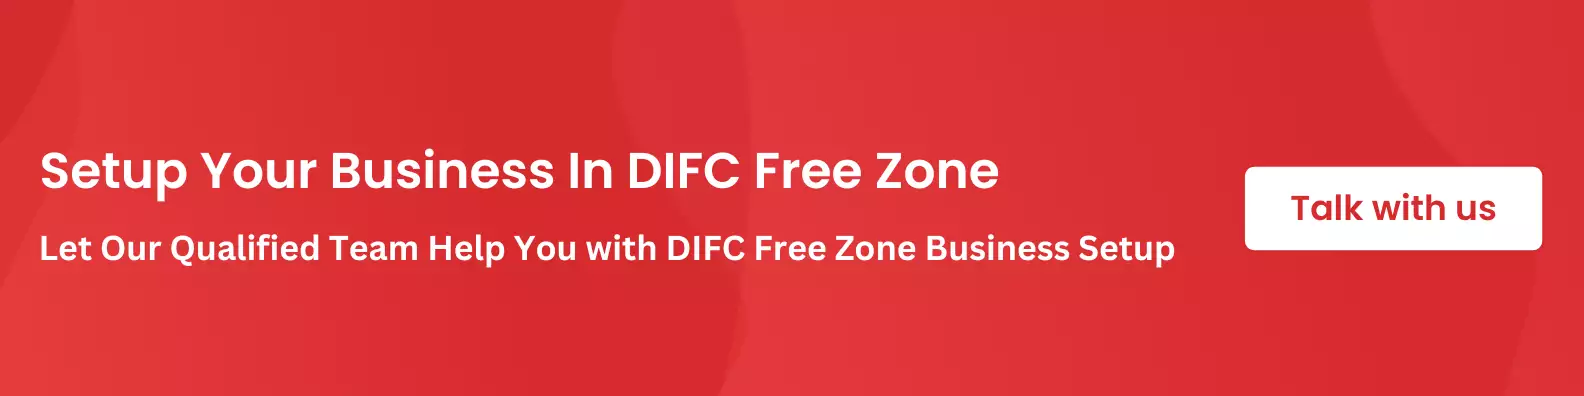 difc-freezone